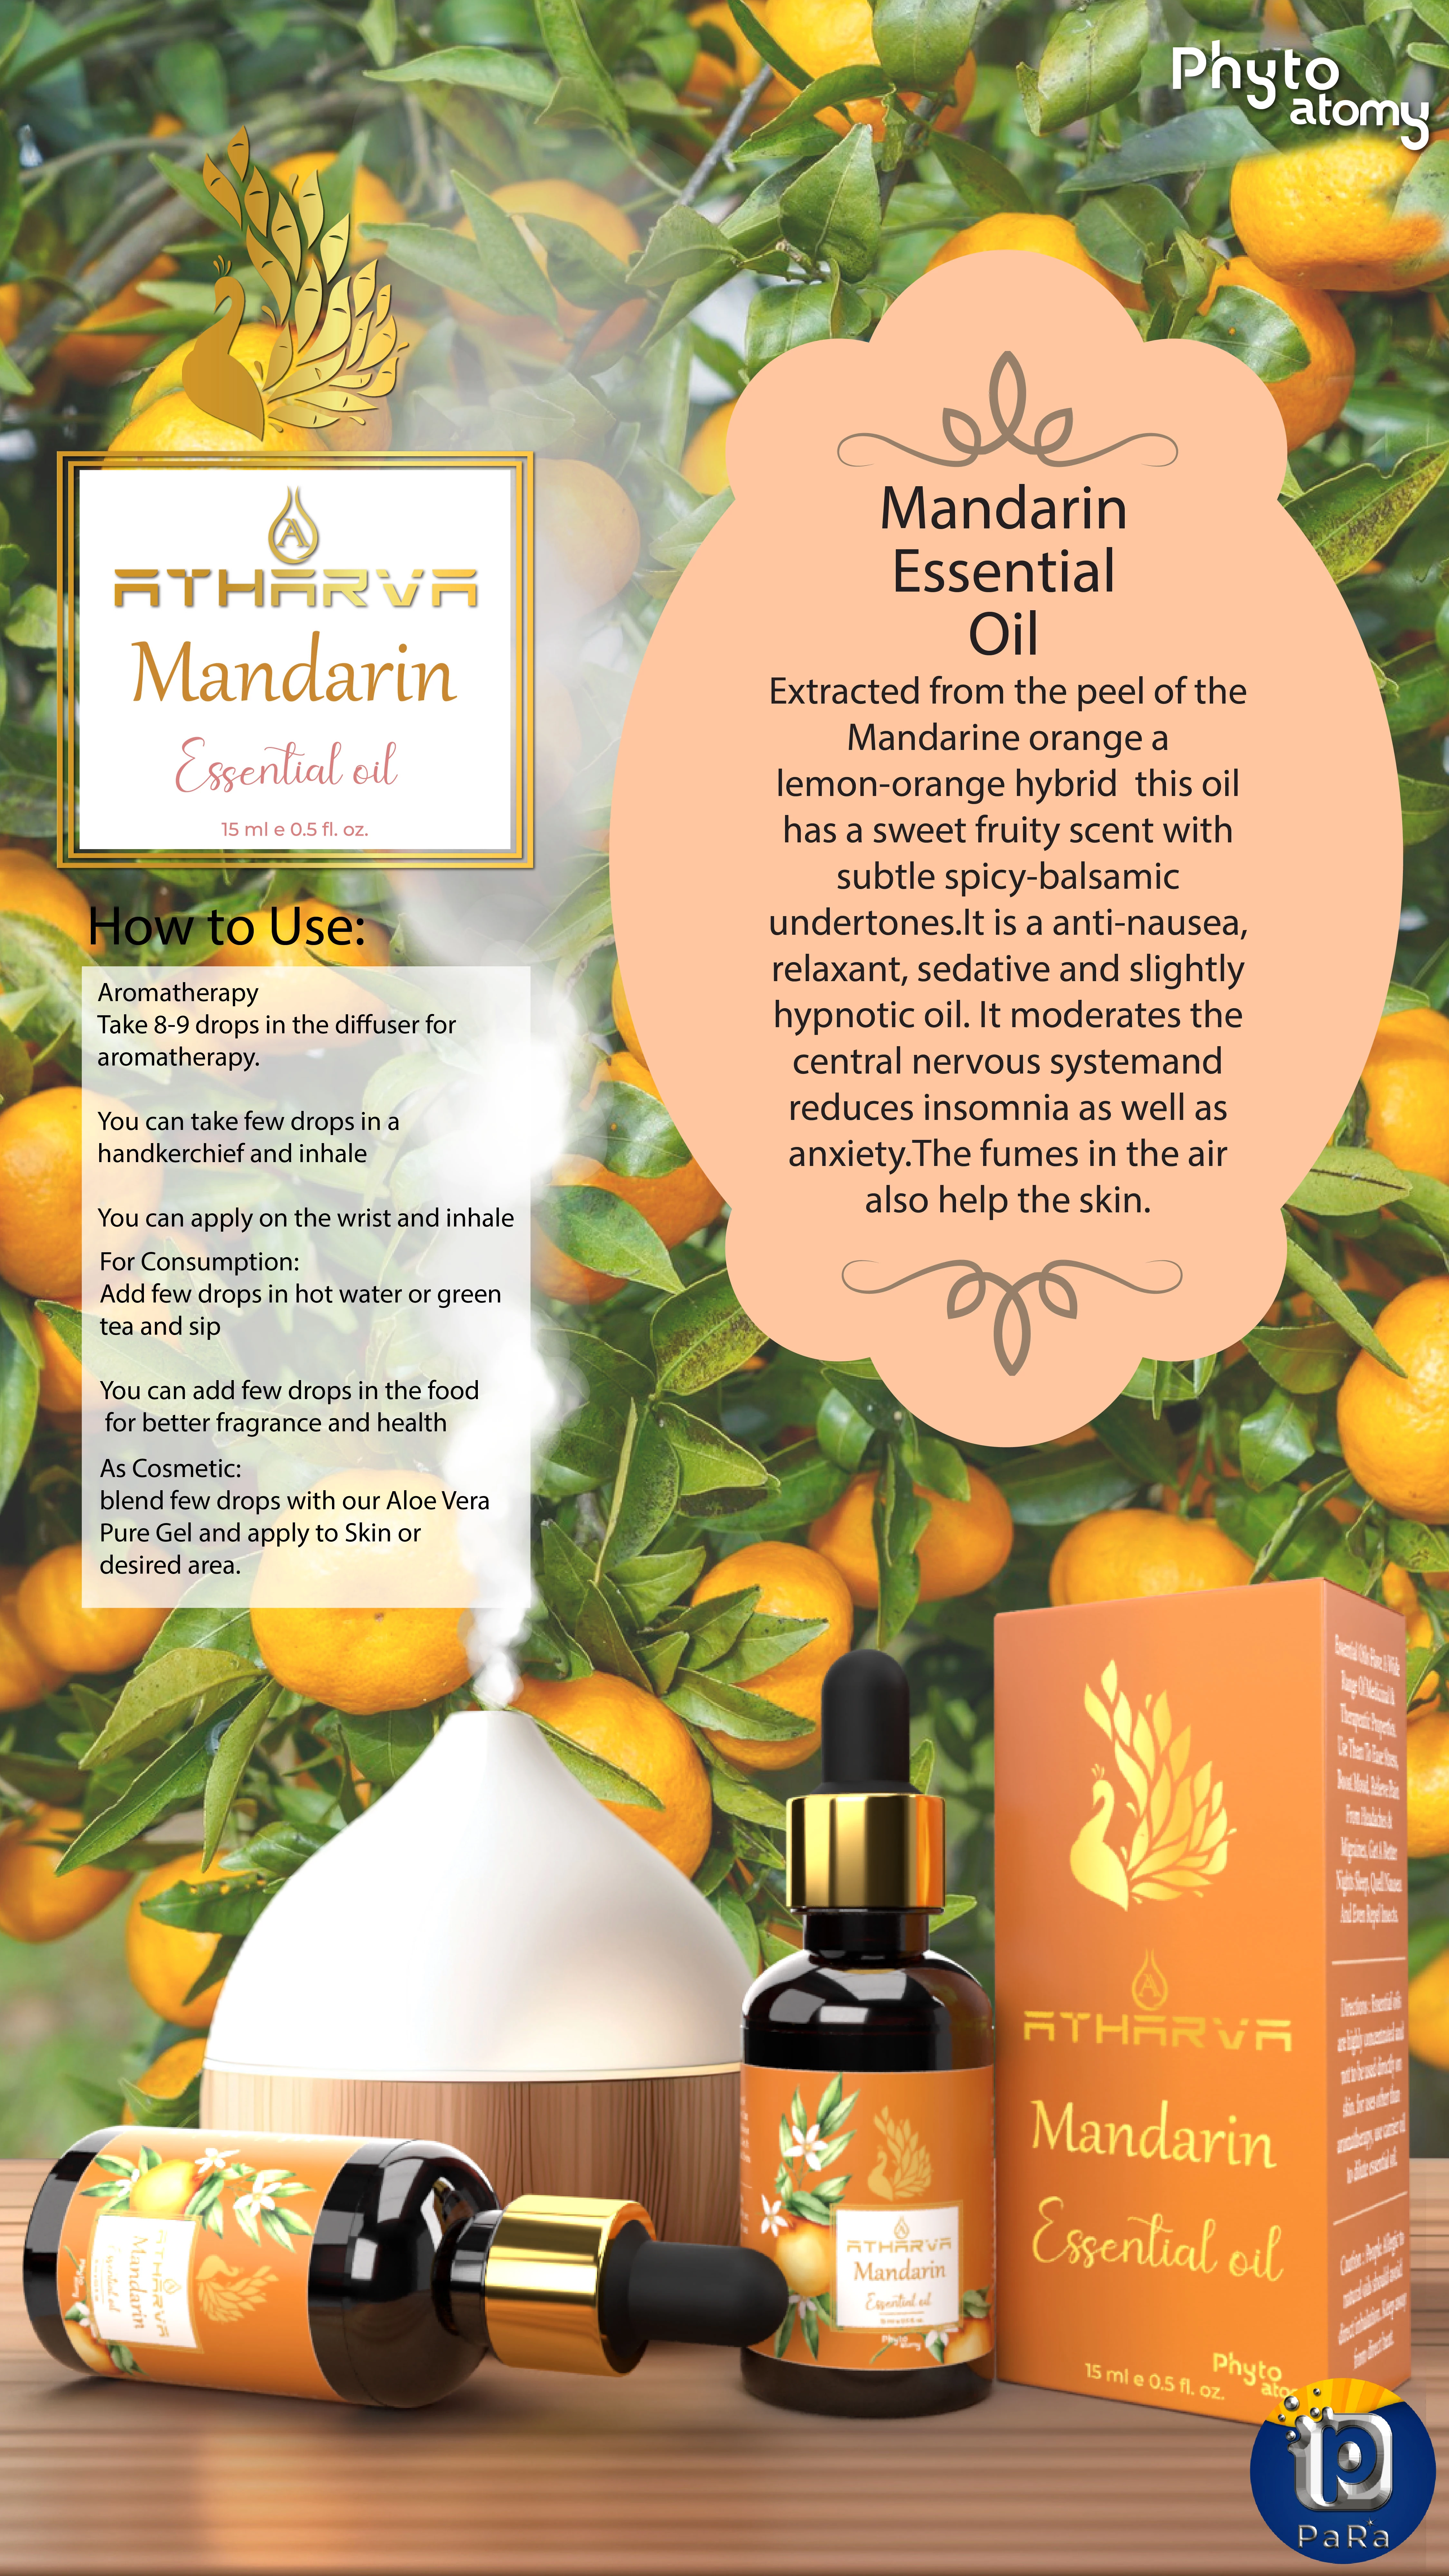 RBV B2B Atharva Mandarin Essential Oil (15ml)-12 Pcs.